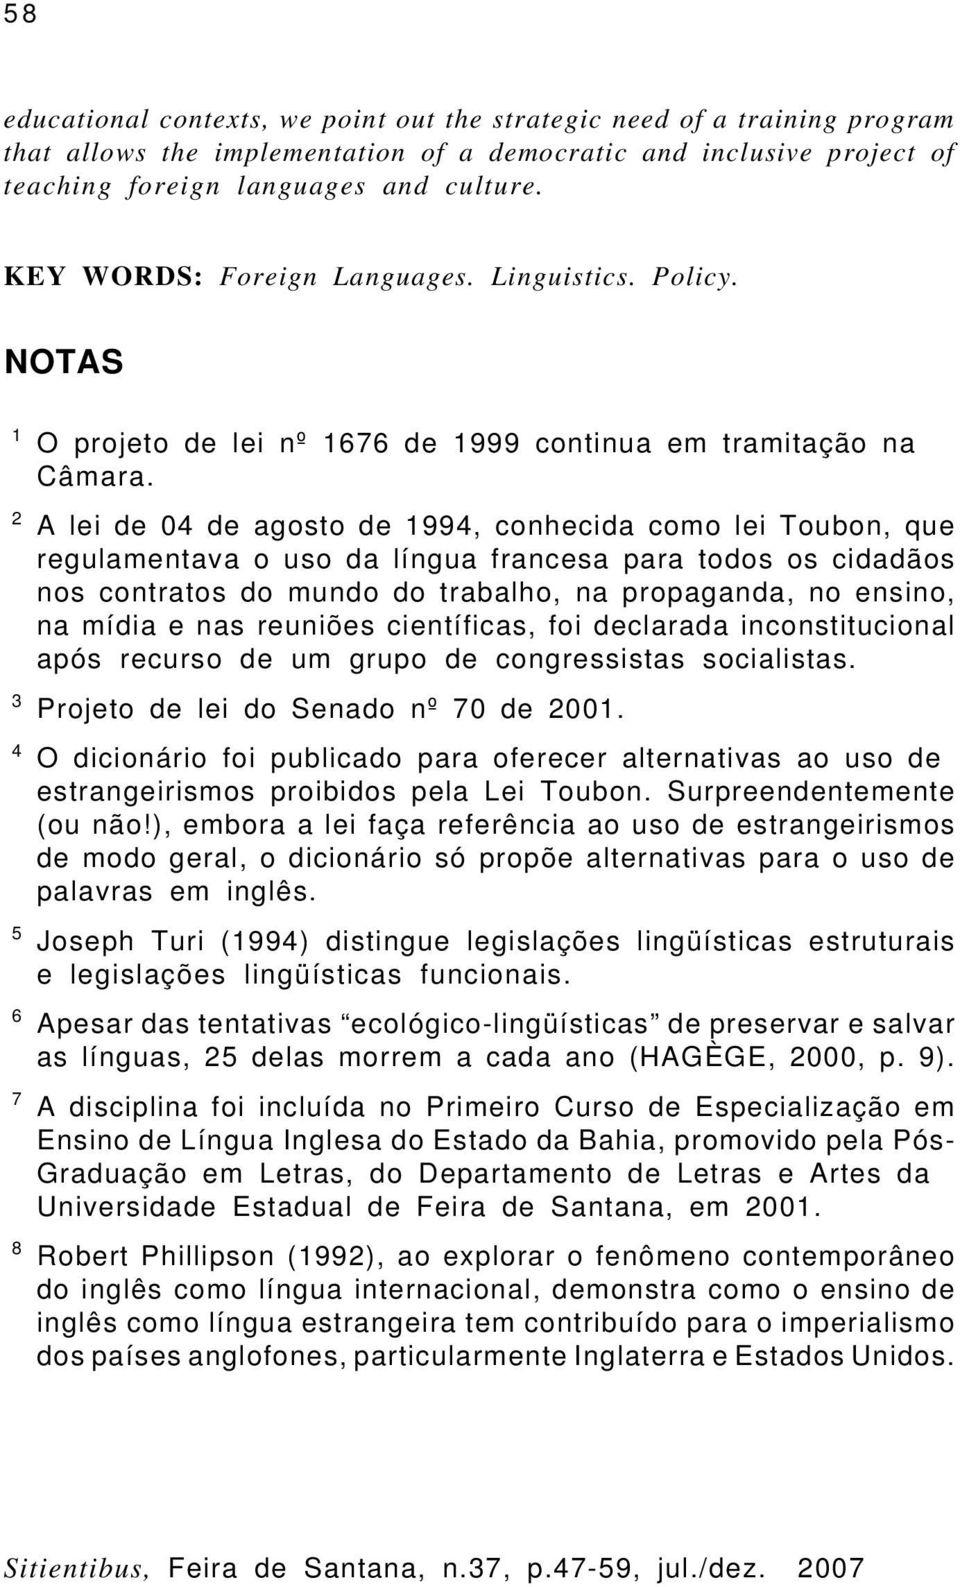 2 A lei de 04 de agosto de 1994, conhecida como lei Toubon, que regulamentava o uso da língua francesa para todos os cidadãos nos contratos do mundo do trabalho, na propaganda, no ensino, na mídia e